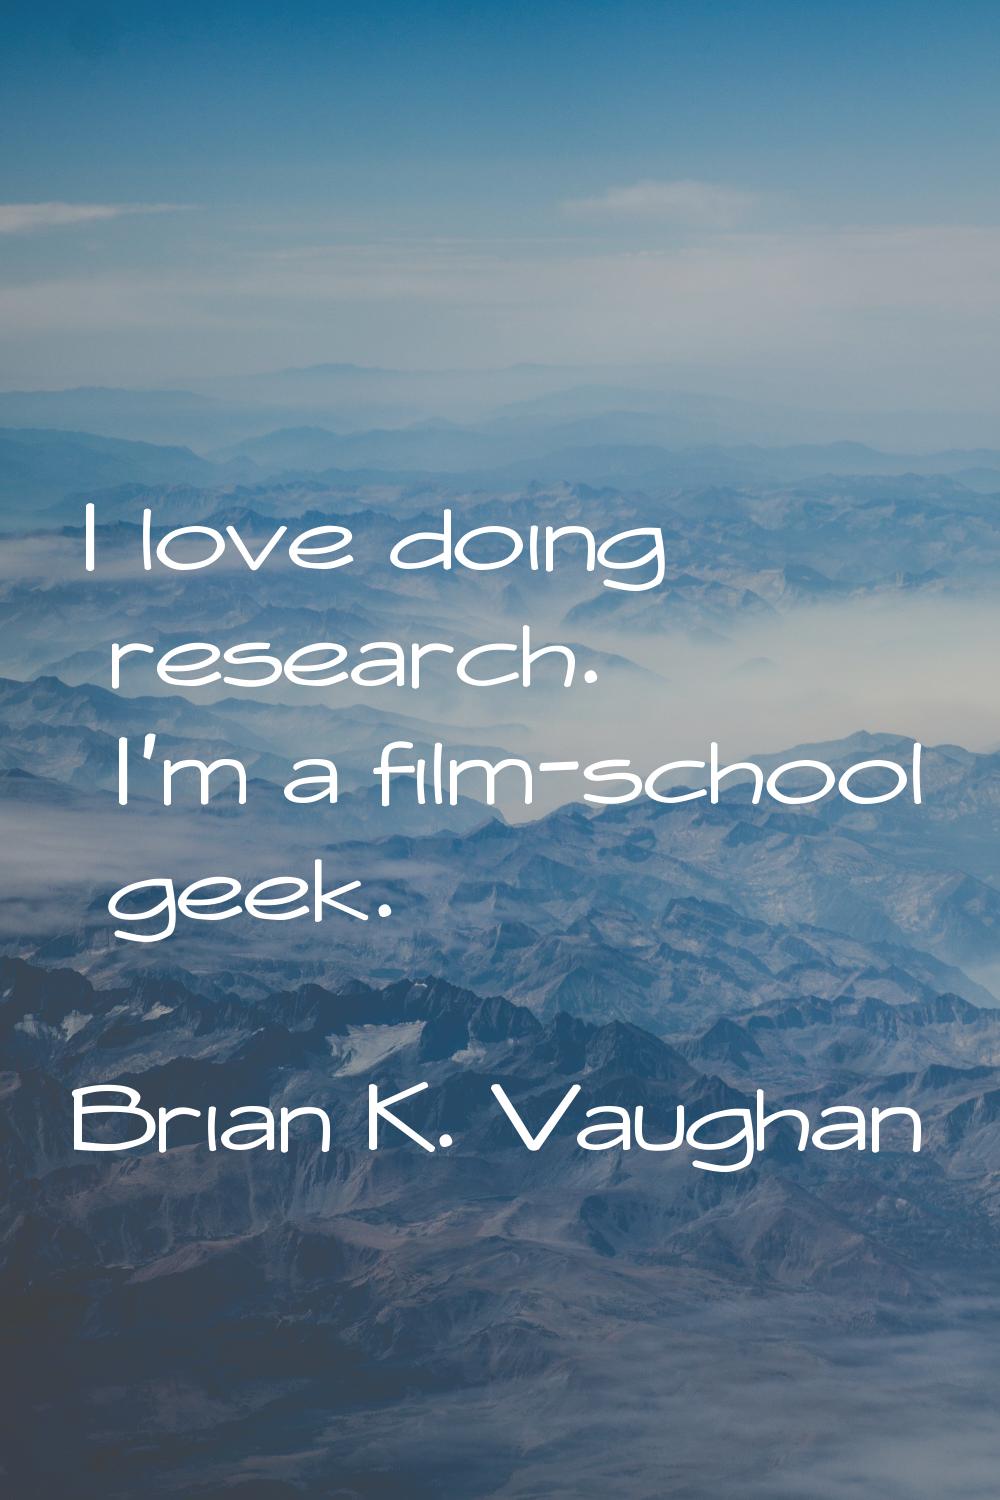 I love doing research. I'm a film-school geek.